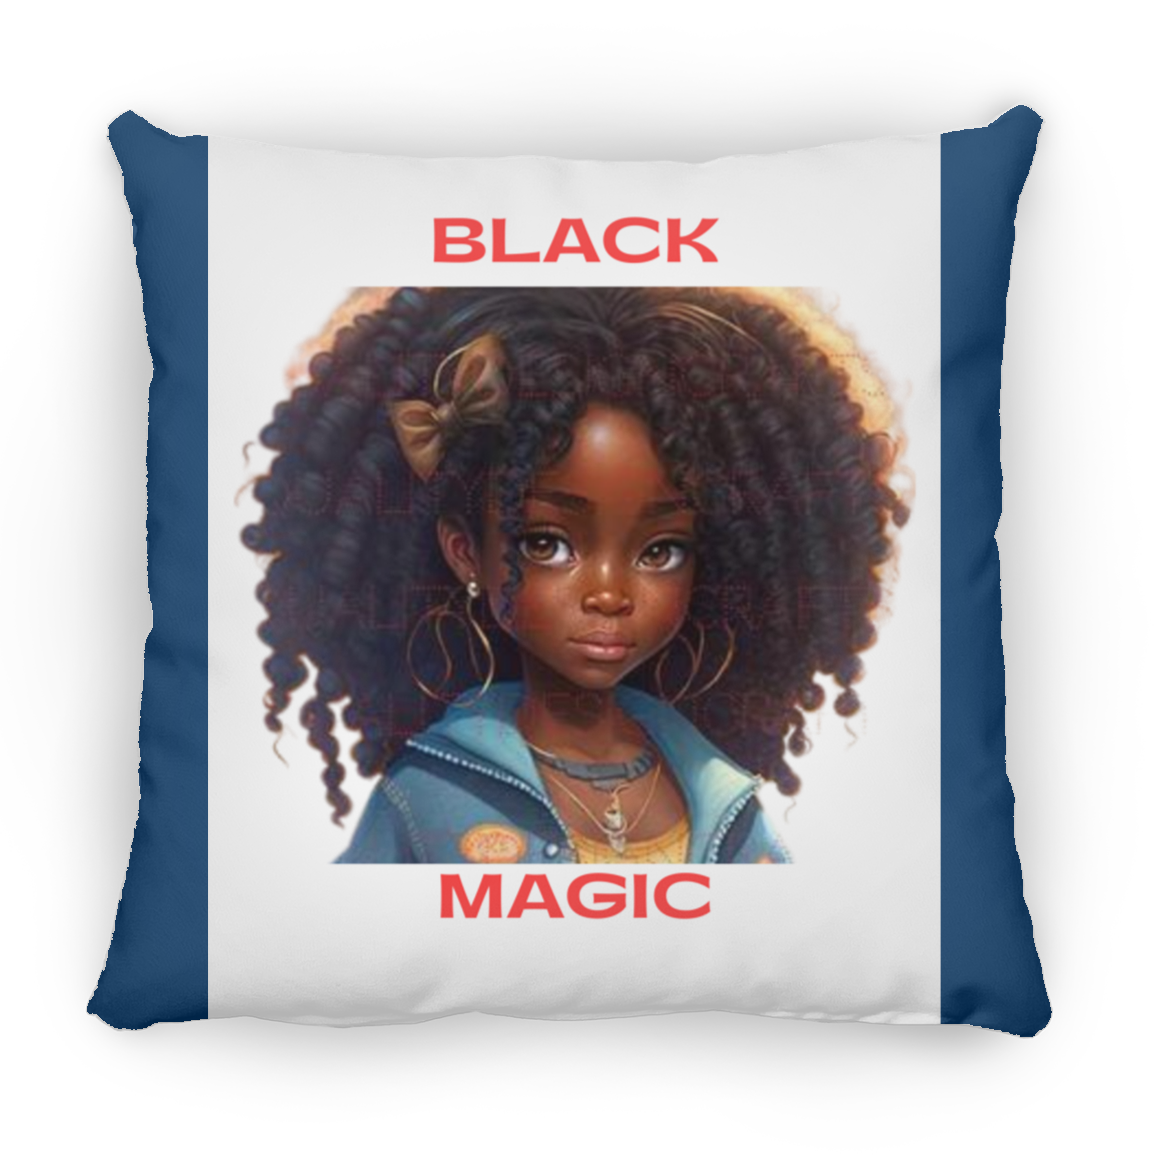 Black Girl Magic Large Square Pillow, Kids Beautiful Black Girl Magic Melanin Black Woman, Afro Fashion Girl African American